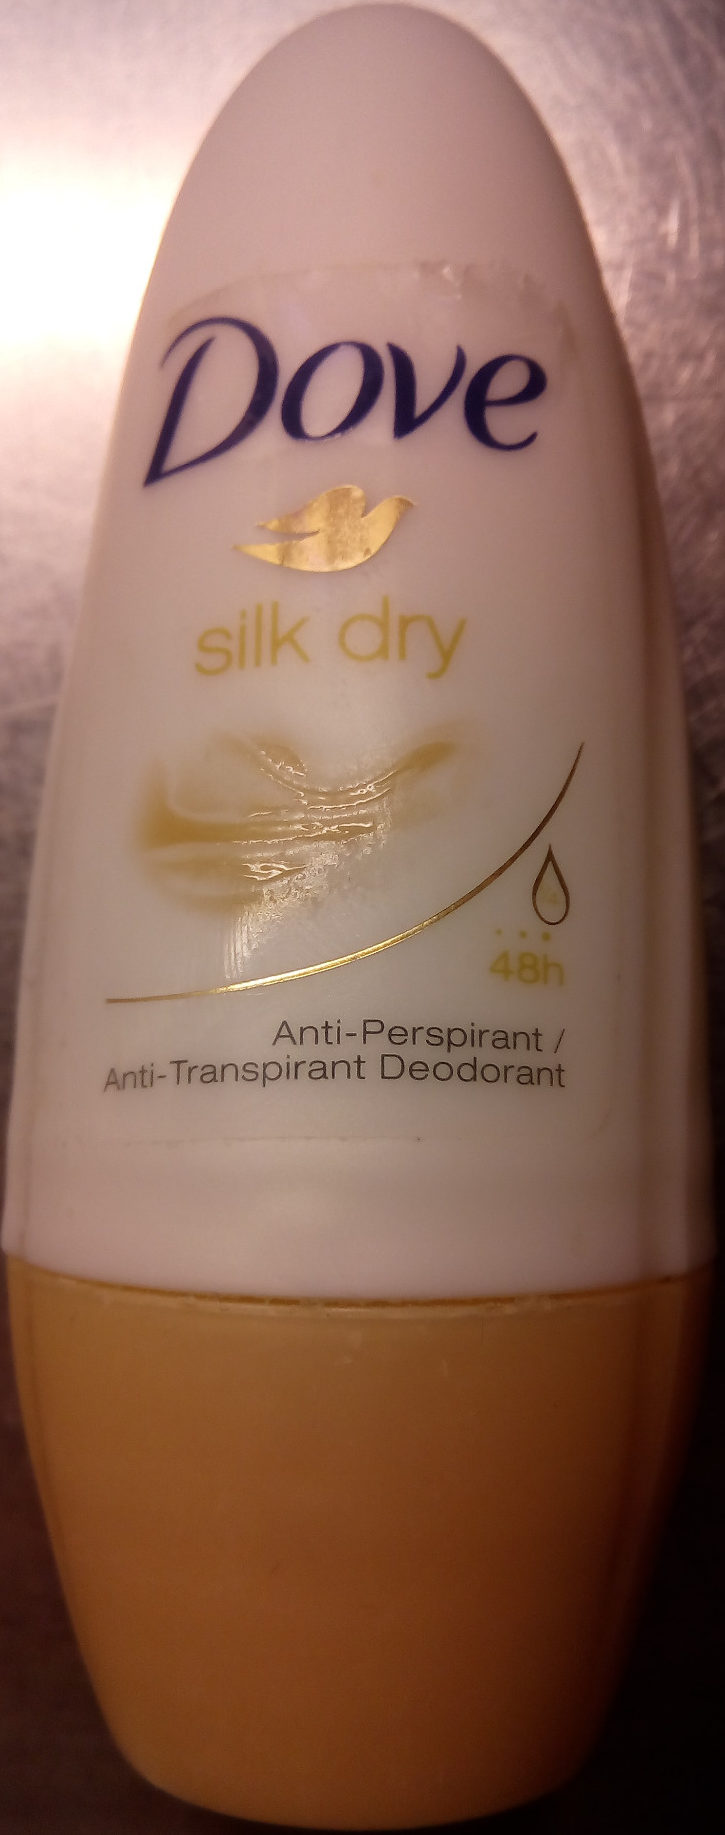 Dove silk dry 24h - Продукт - en